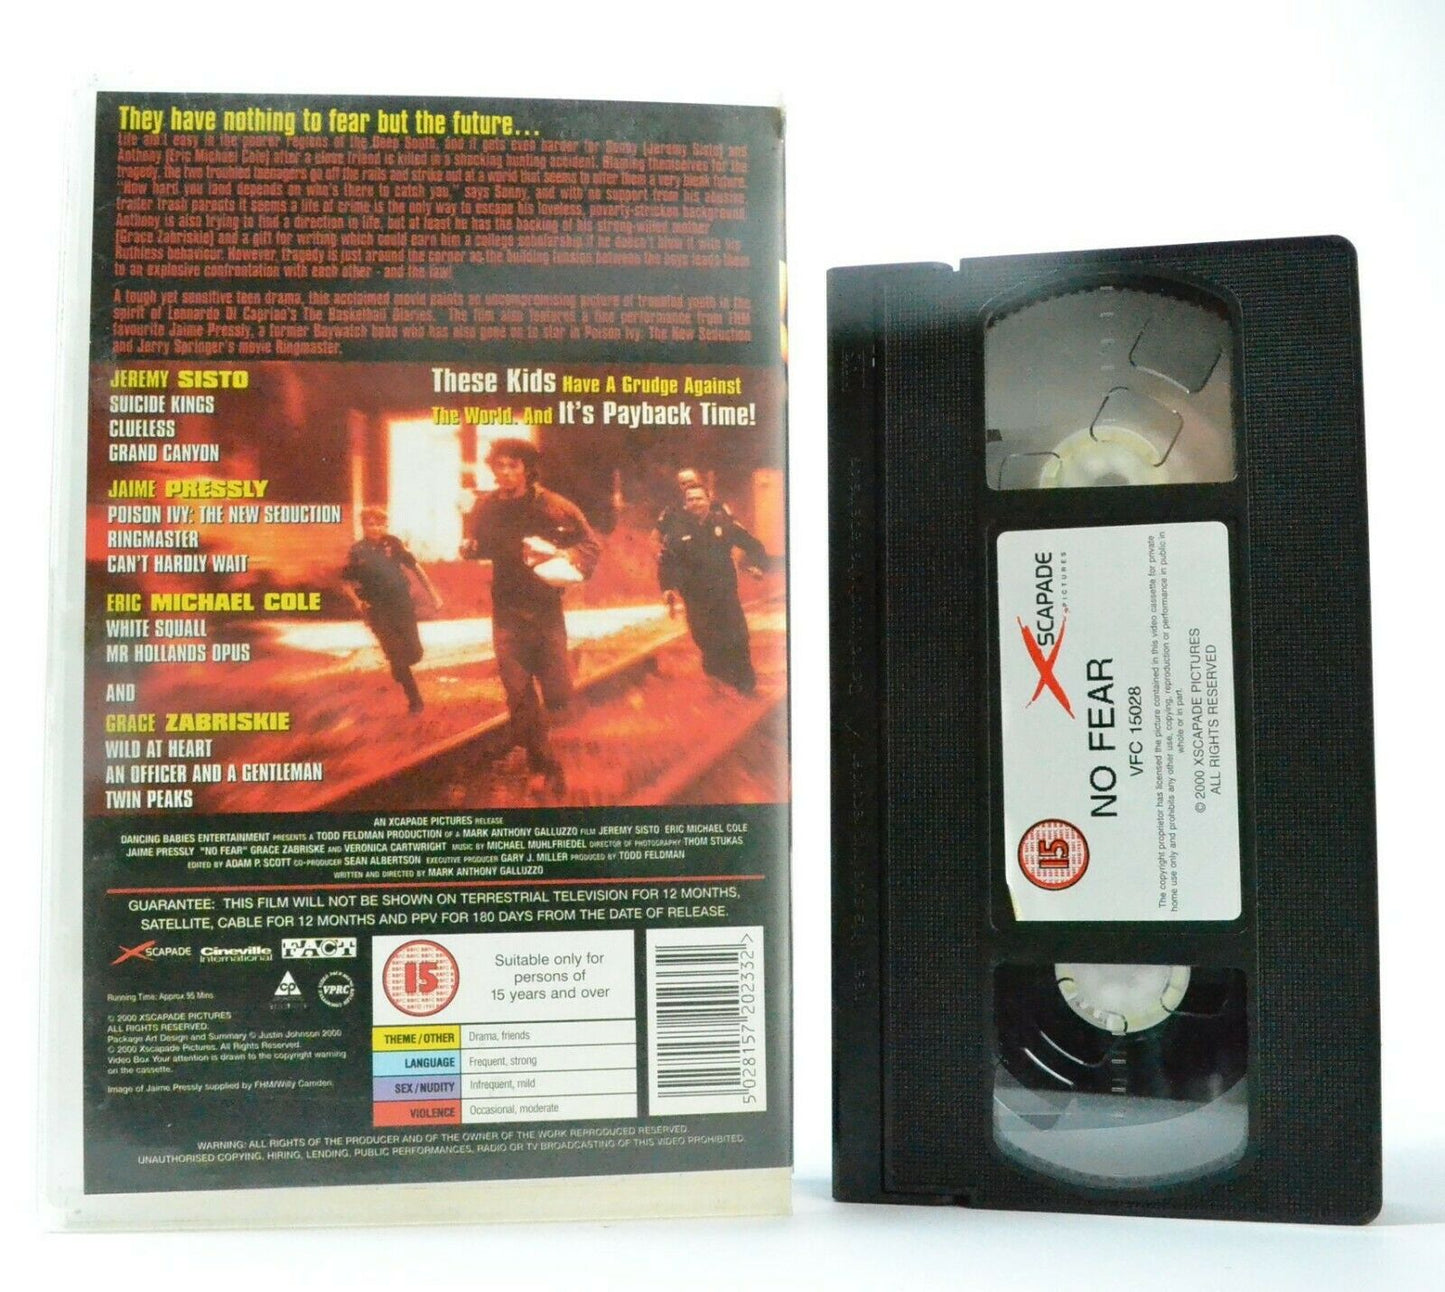 No Fear: Teen Drama (2000) - Large Box - Jaime Pressly/Jeremy Sisto - Pal VHS-